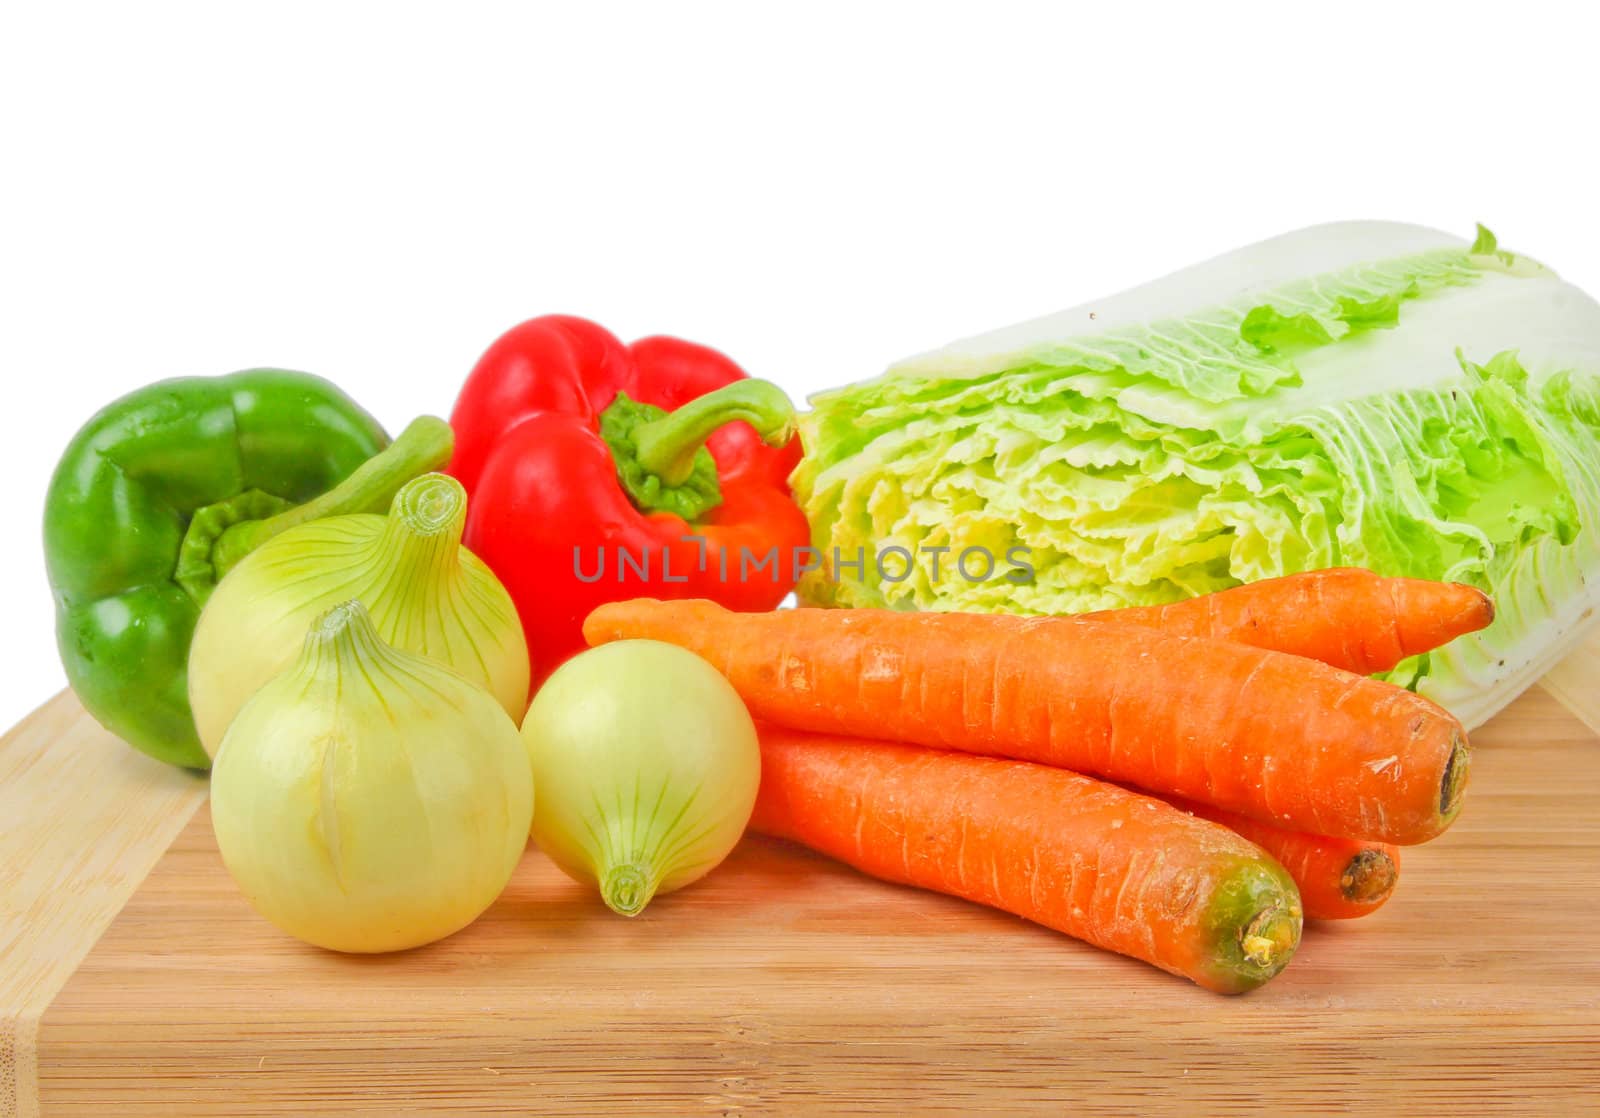 Raw fresh vegetables by dotweb